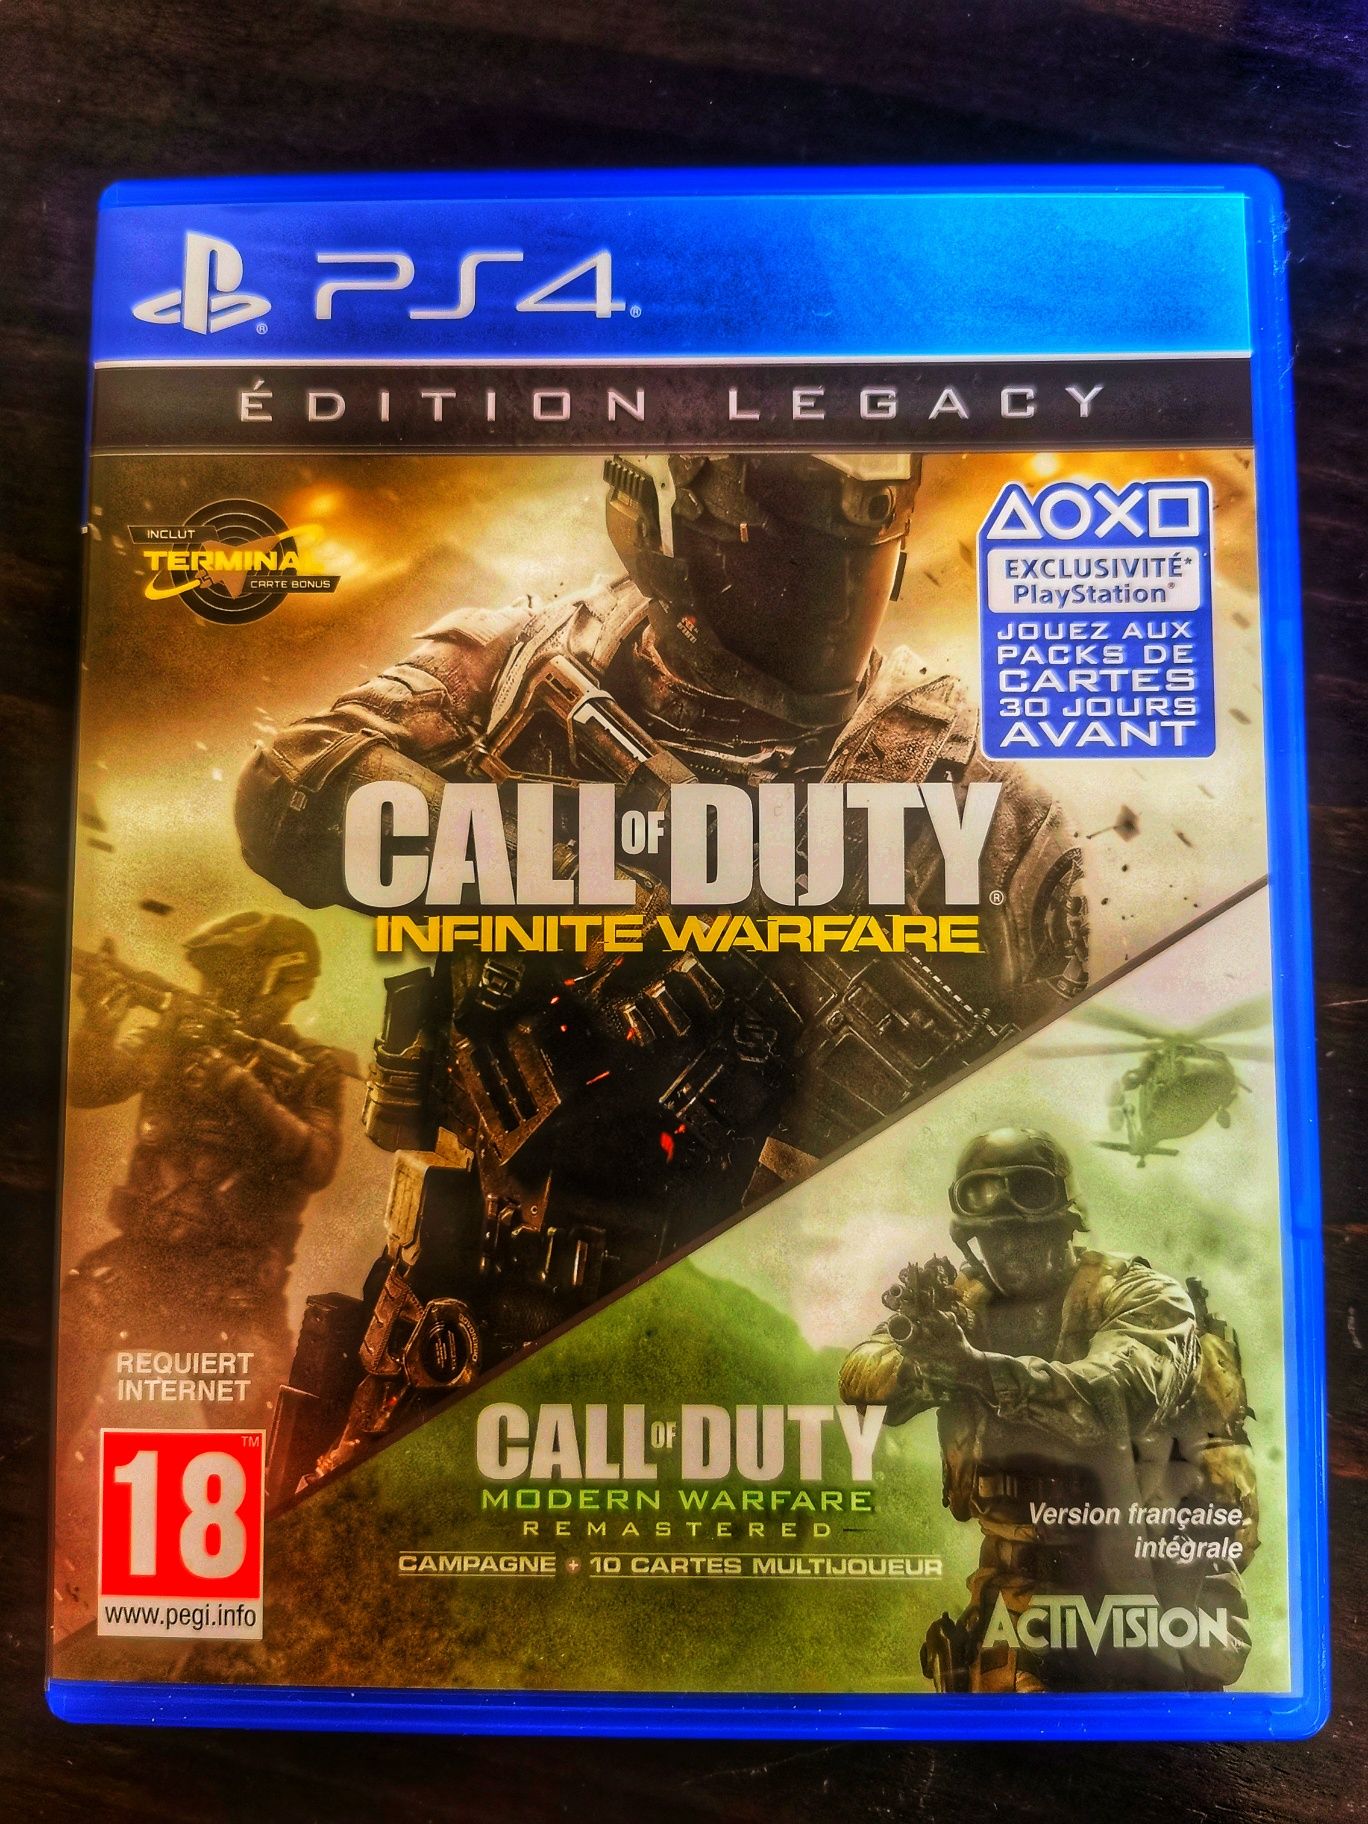 Gall of Duty /Playstation 4